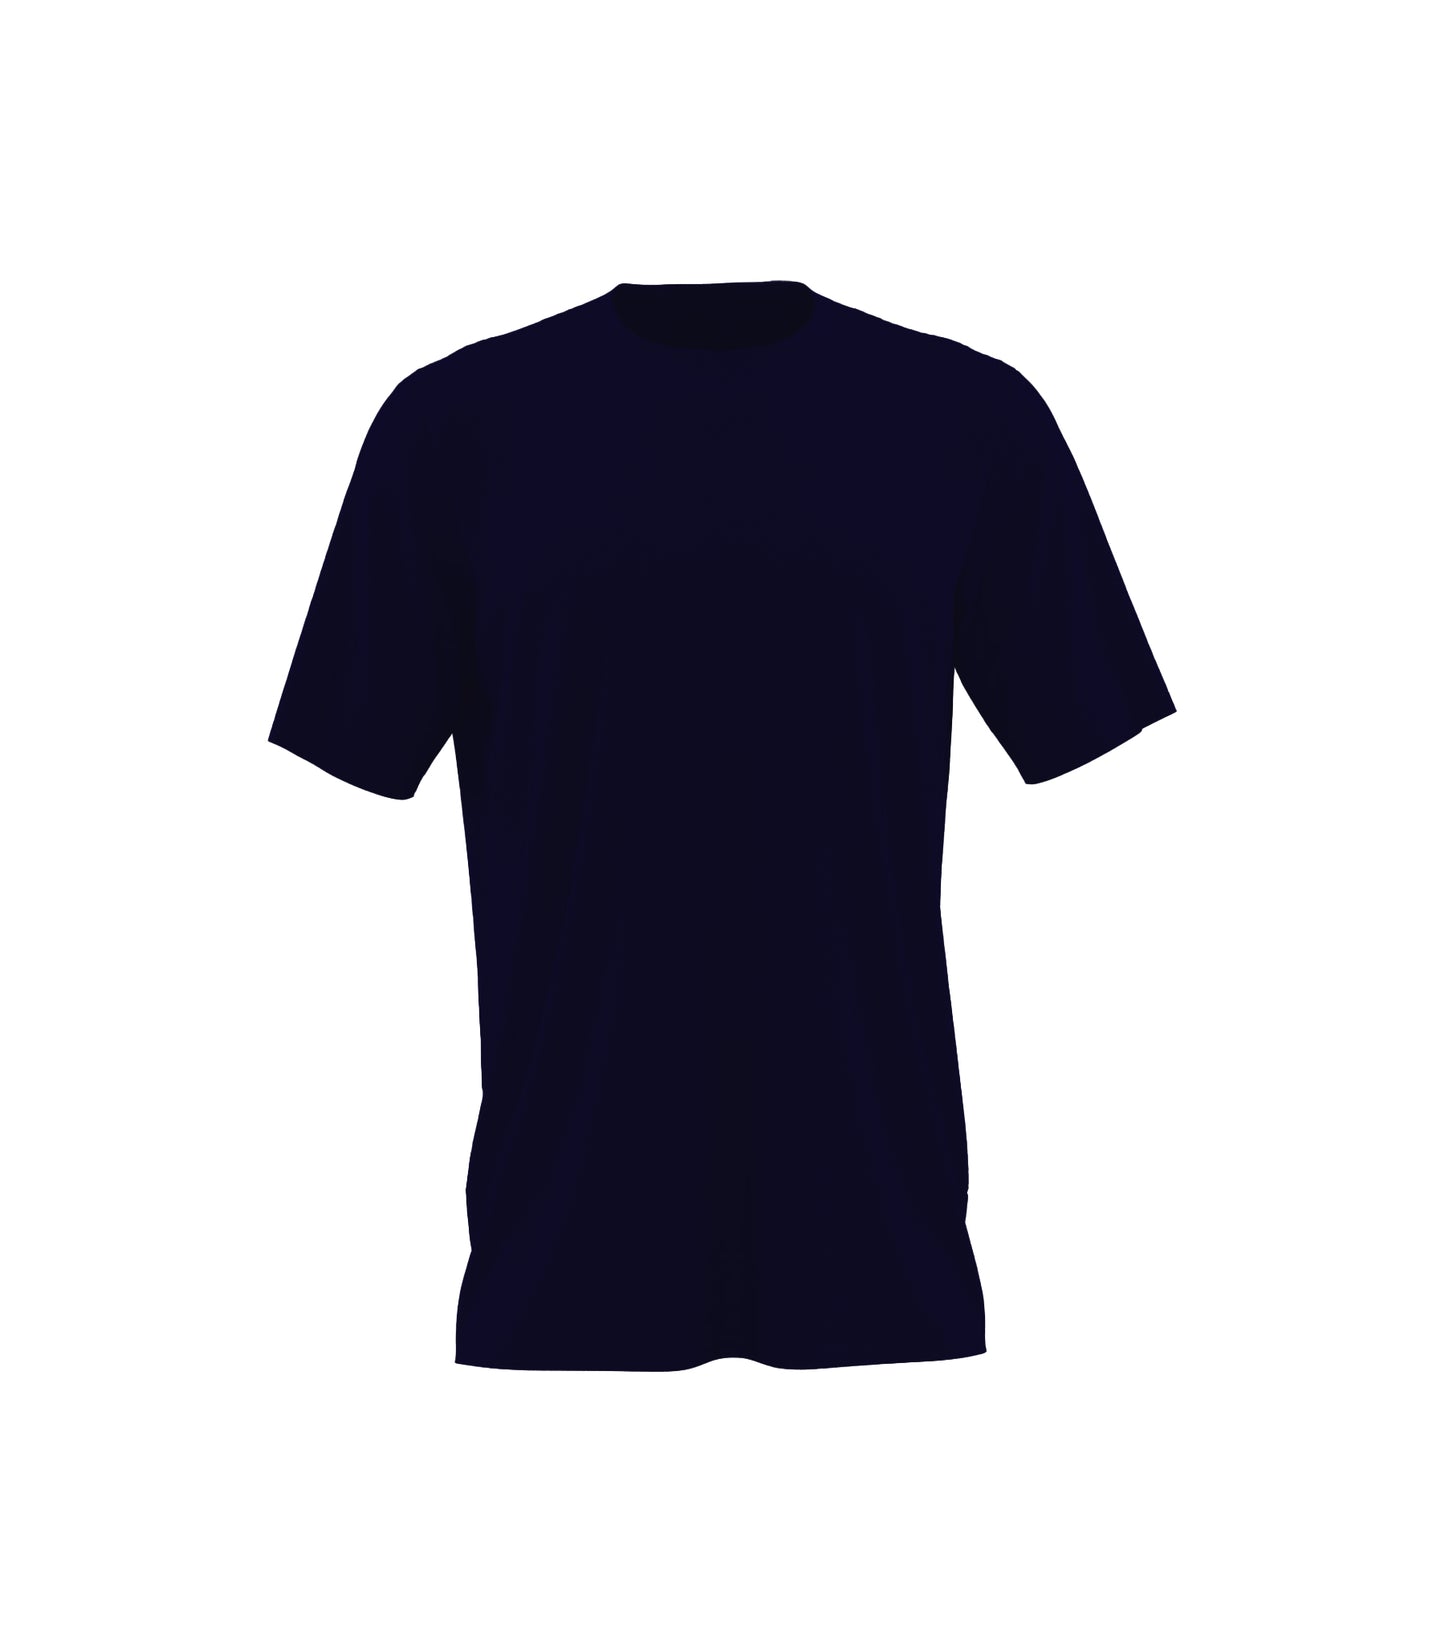 Blue Men's Round Neck Cotton T-shirt.